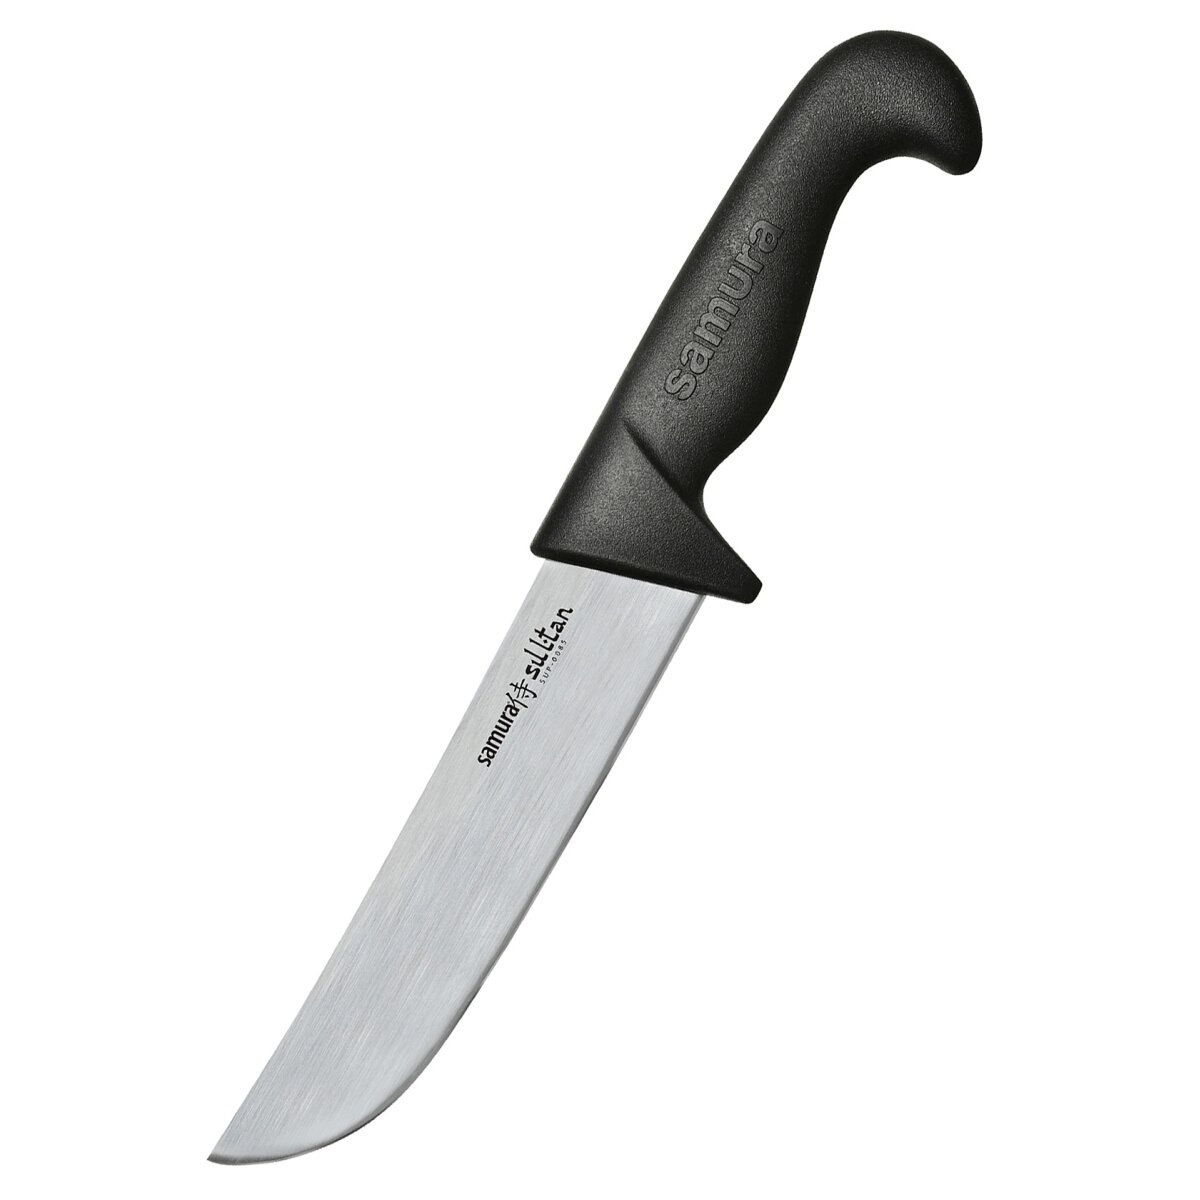 Samura Sultan Pro Chefs Messer, 166mm